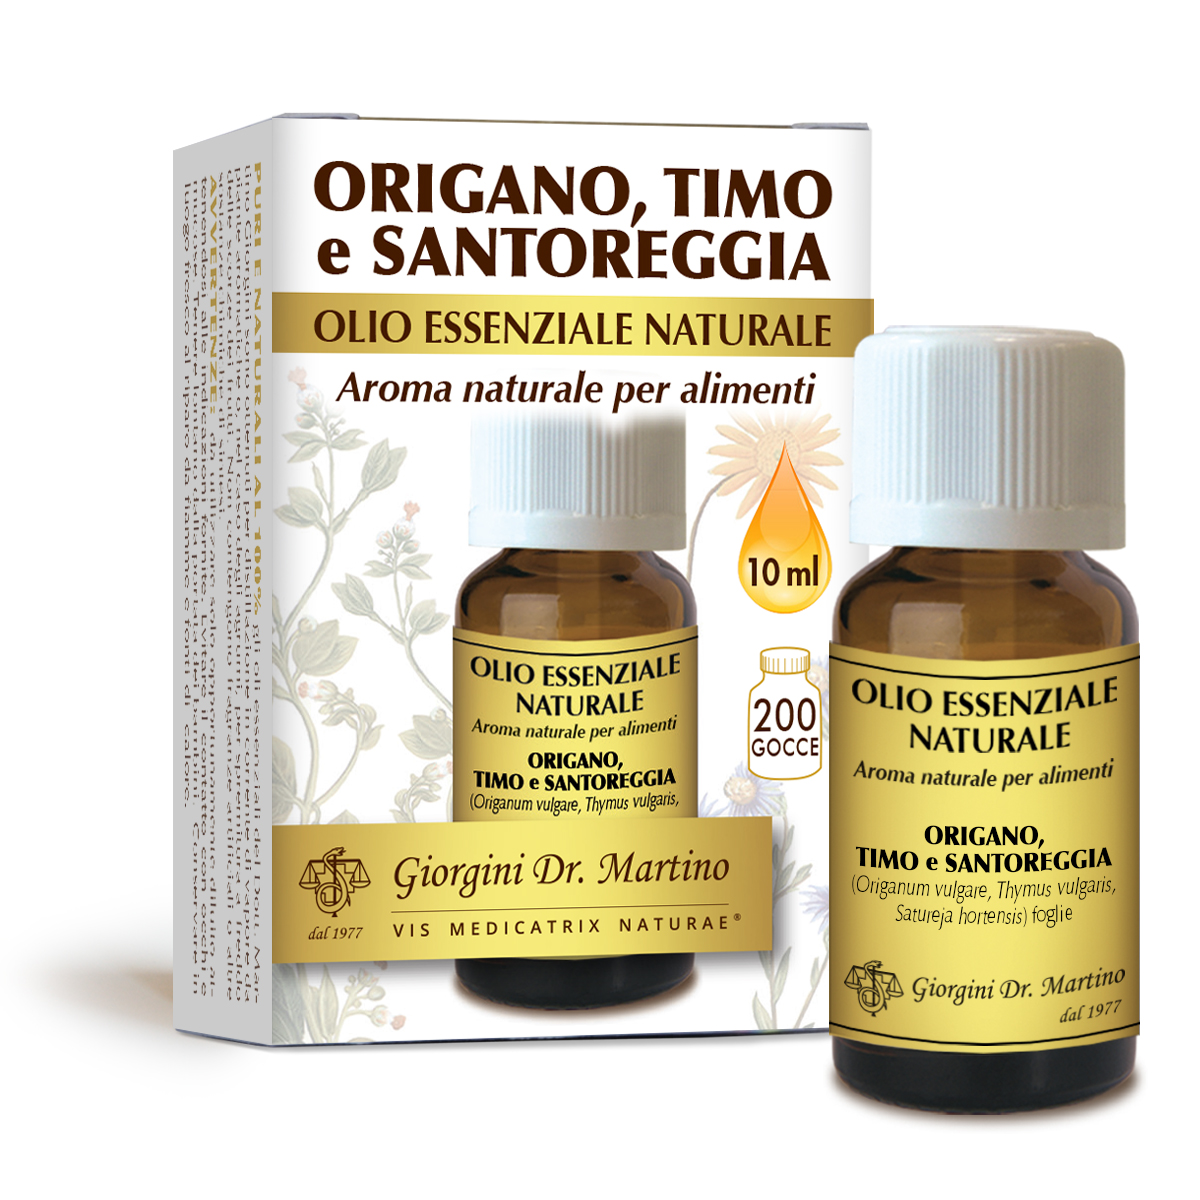 ORIGANO TIMO SANTOREGGIA Olio essenziale naturale